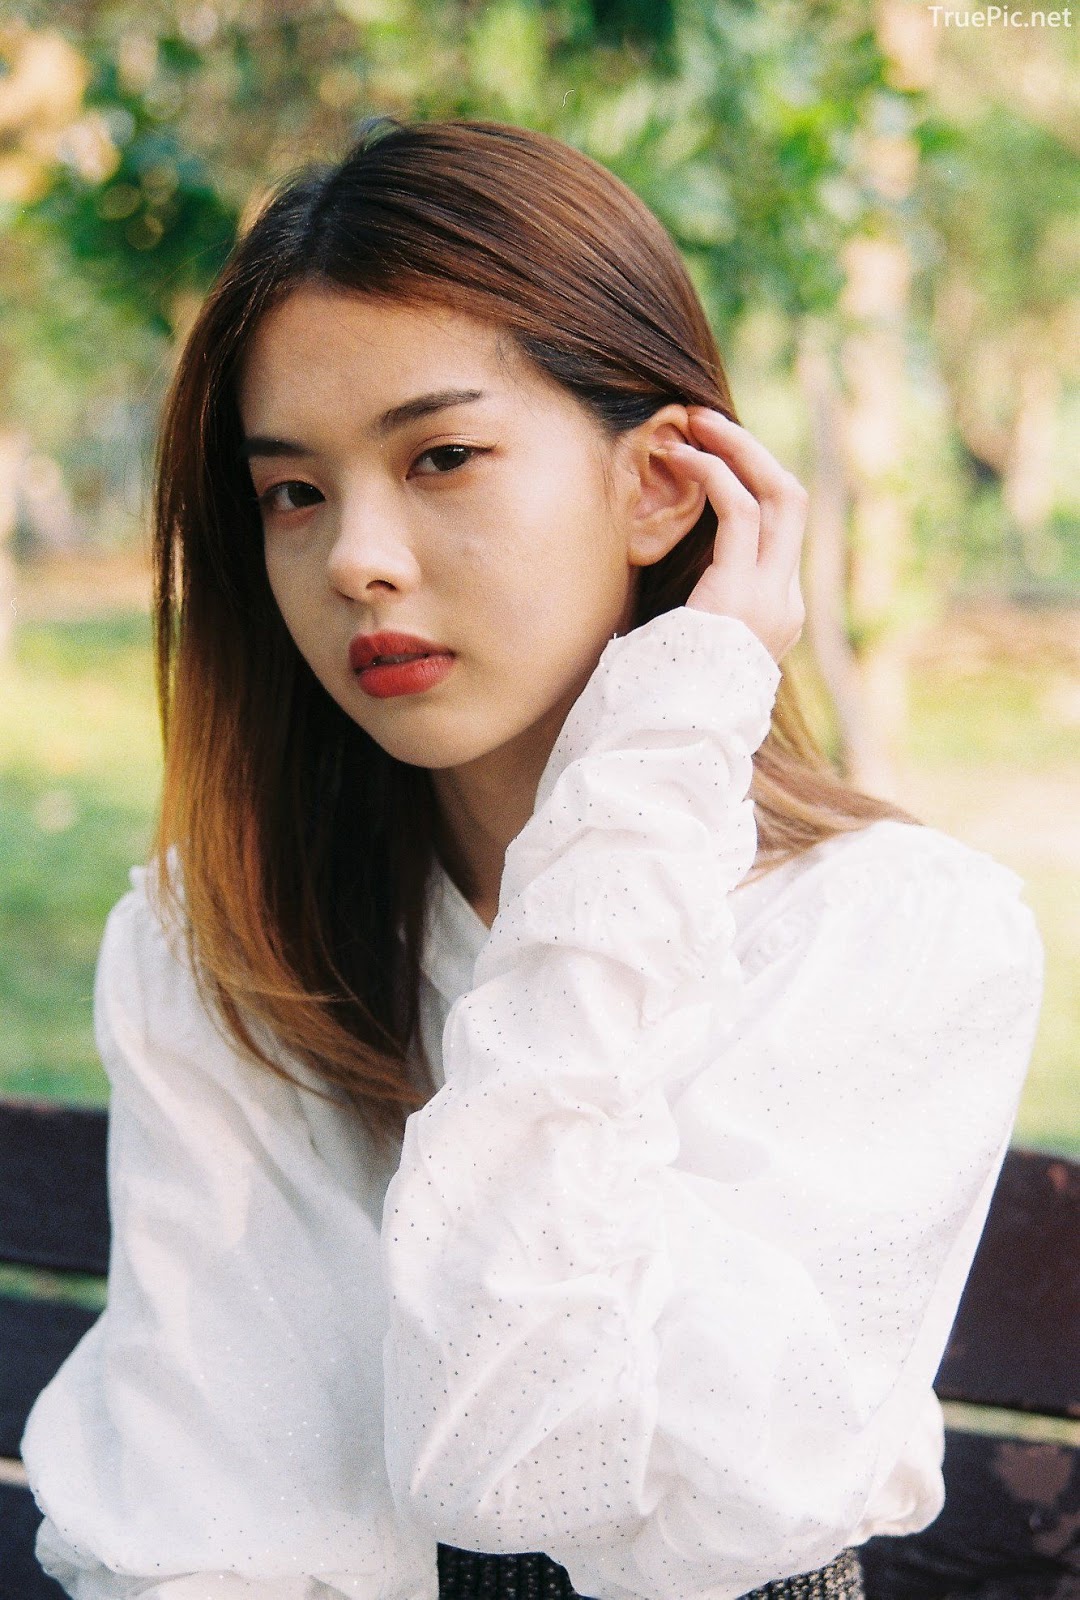 Thailand model - Nut Theerarat - She so beautiful on film image